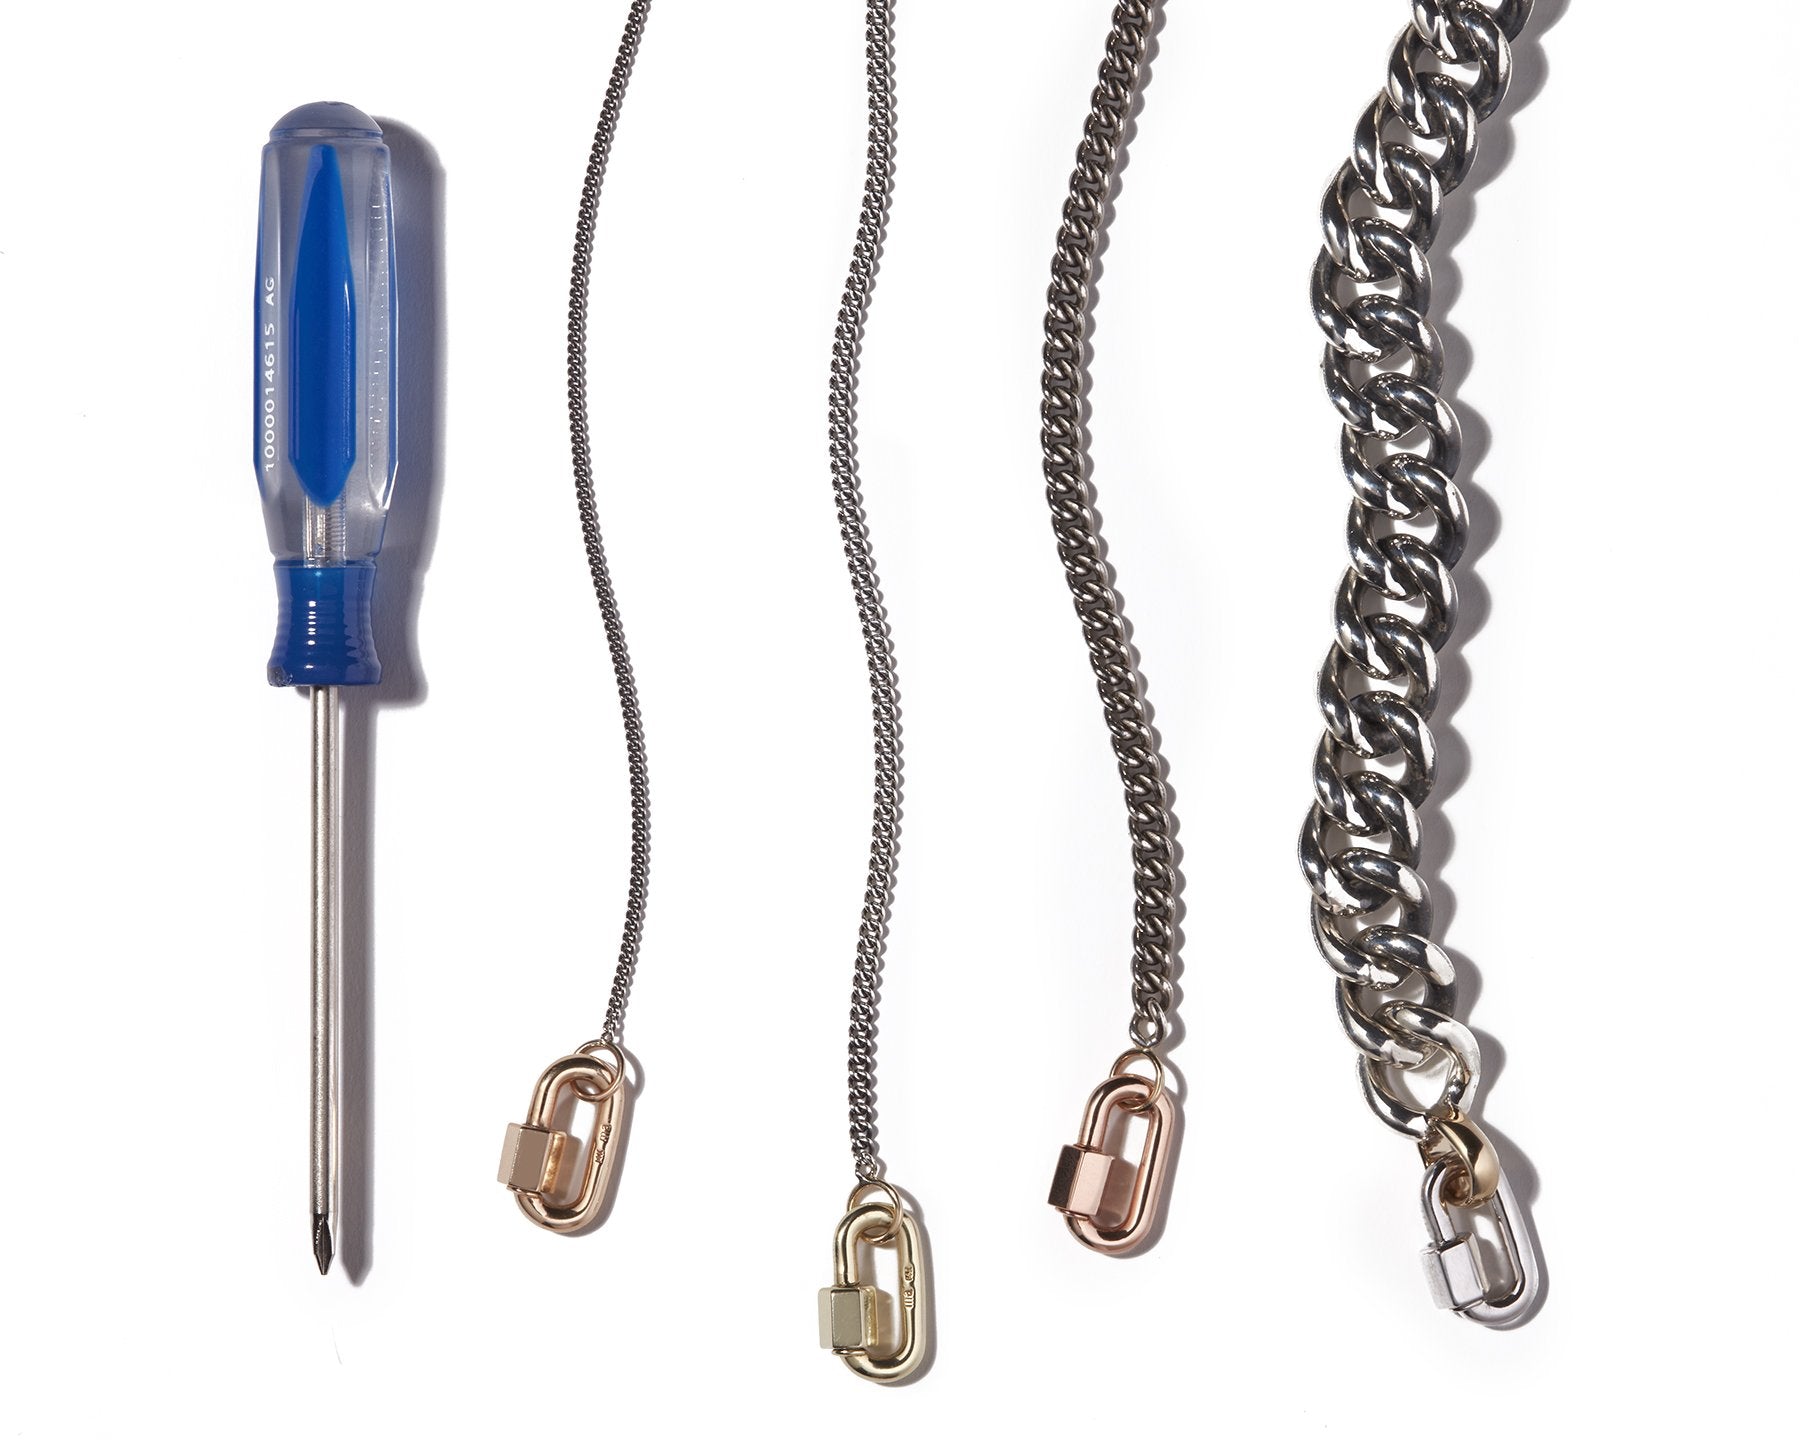 Solid Silver Curb Chain Simple Chain Bracelet Thin Curb 